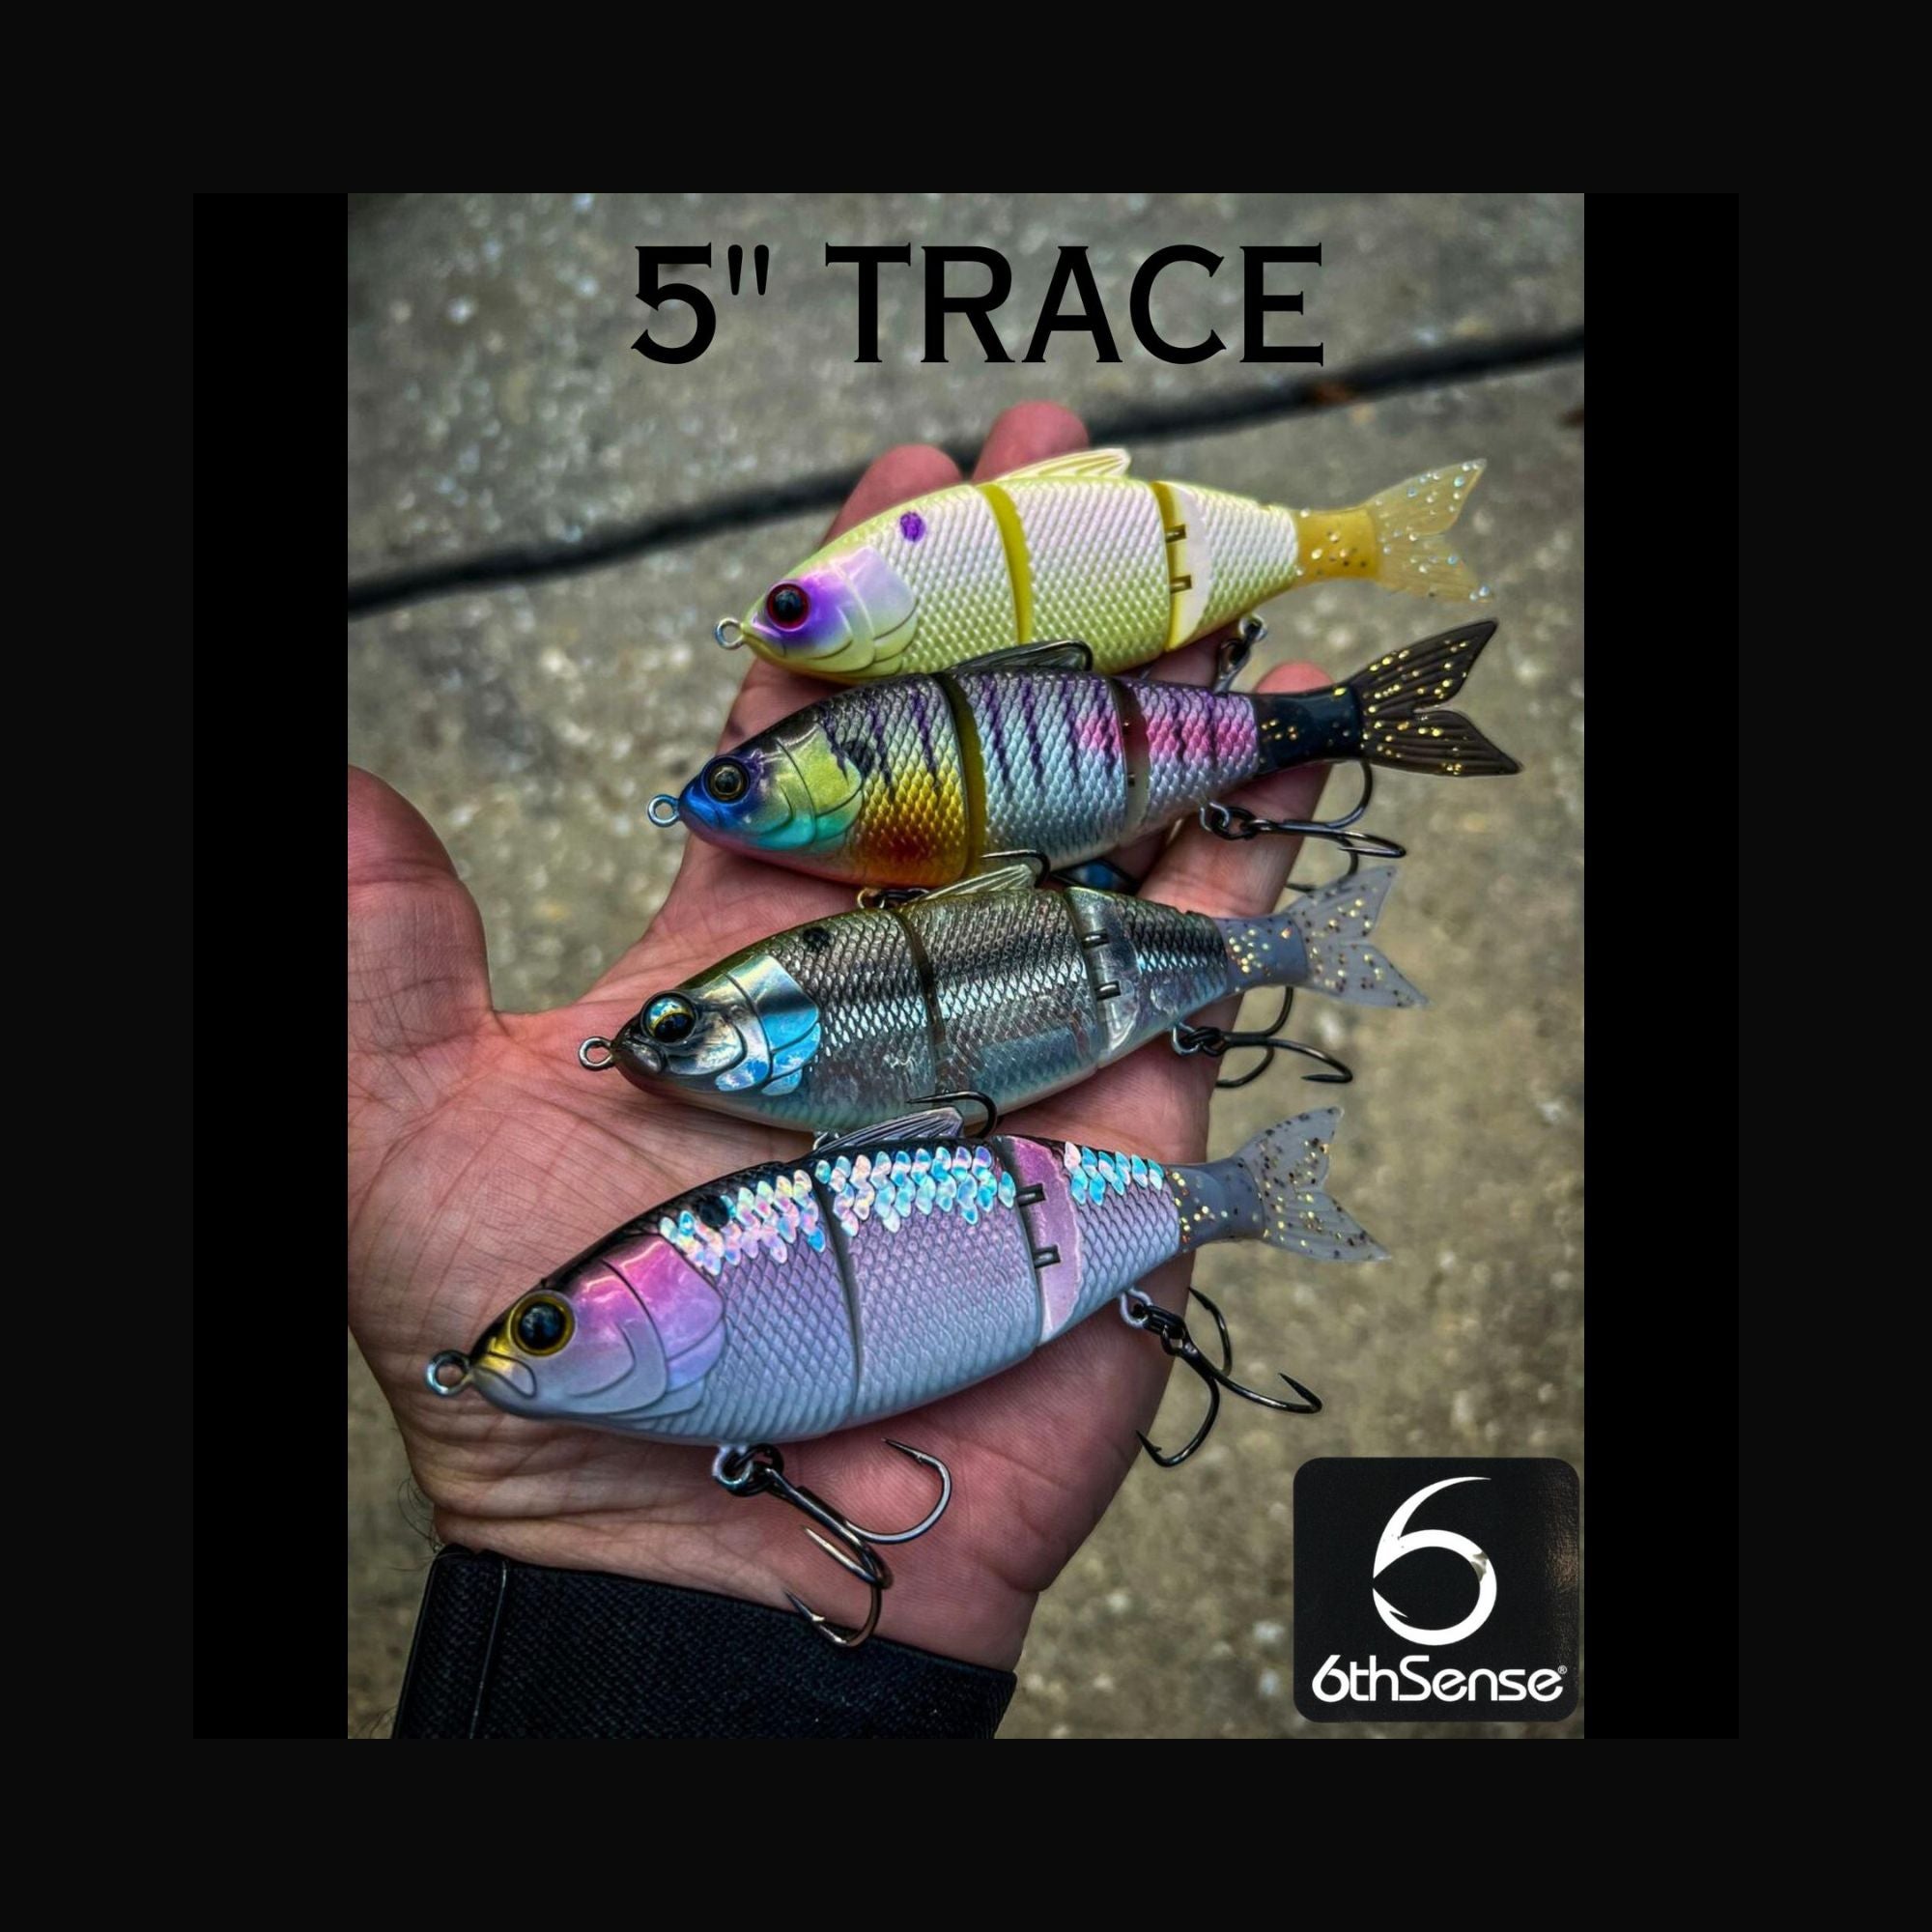 Trace 5 Swimbait, 6th Sense Fishing, 4 piece hard bait, Store